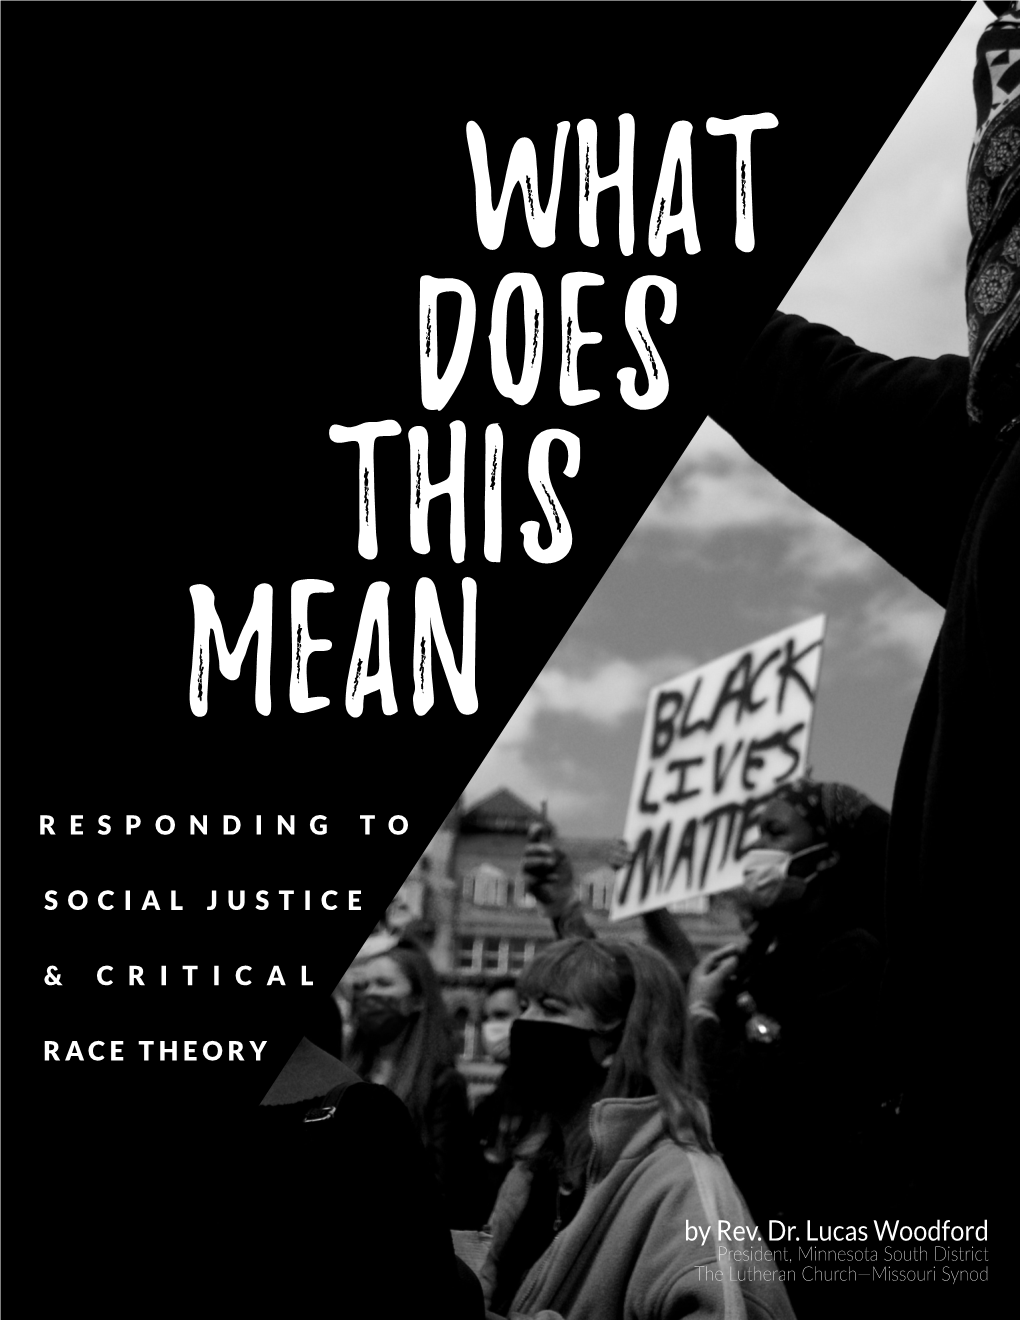 Respondingto Social Justice & Critical Race Theory